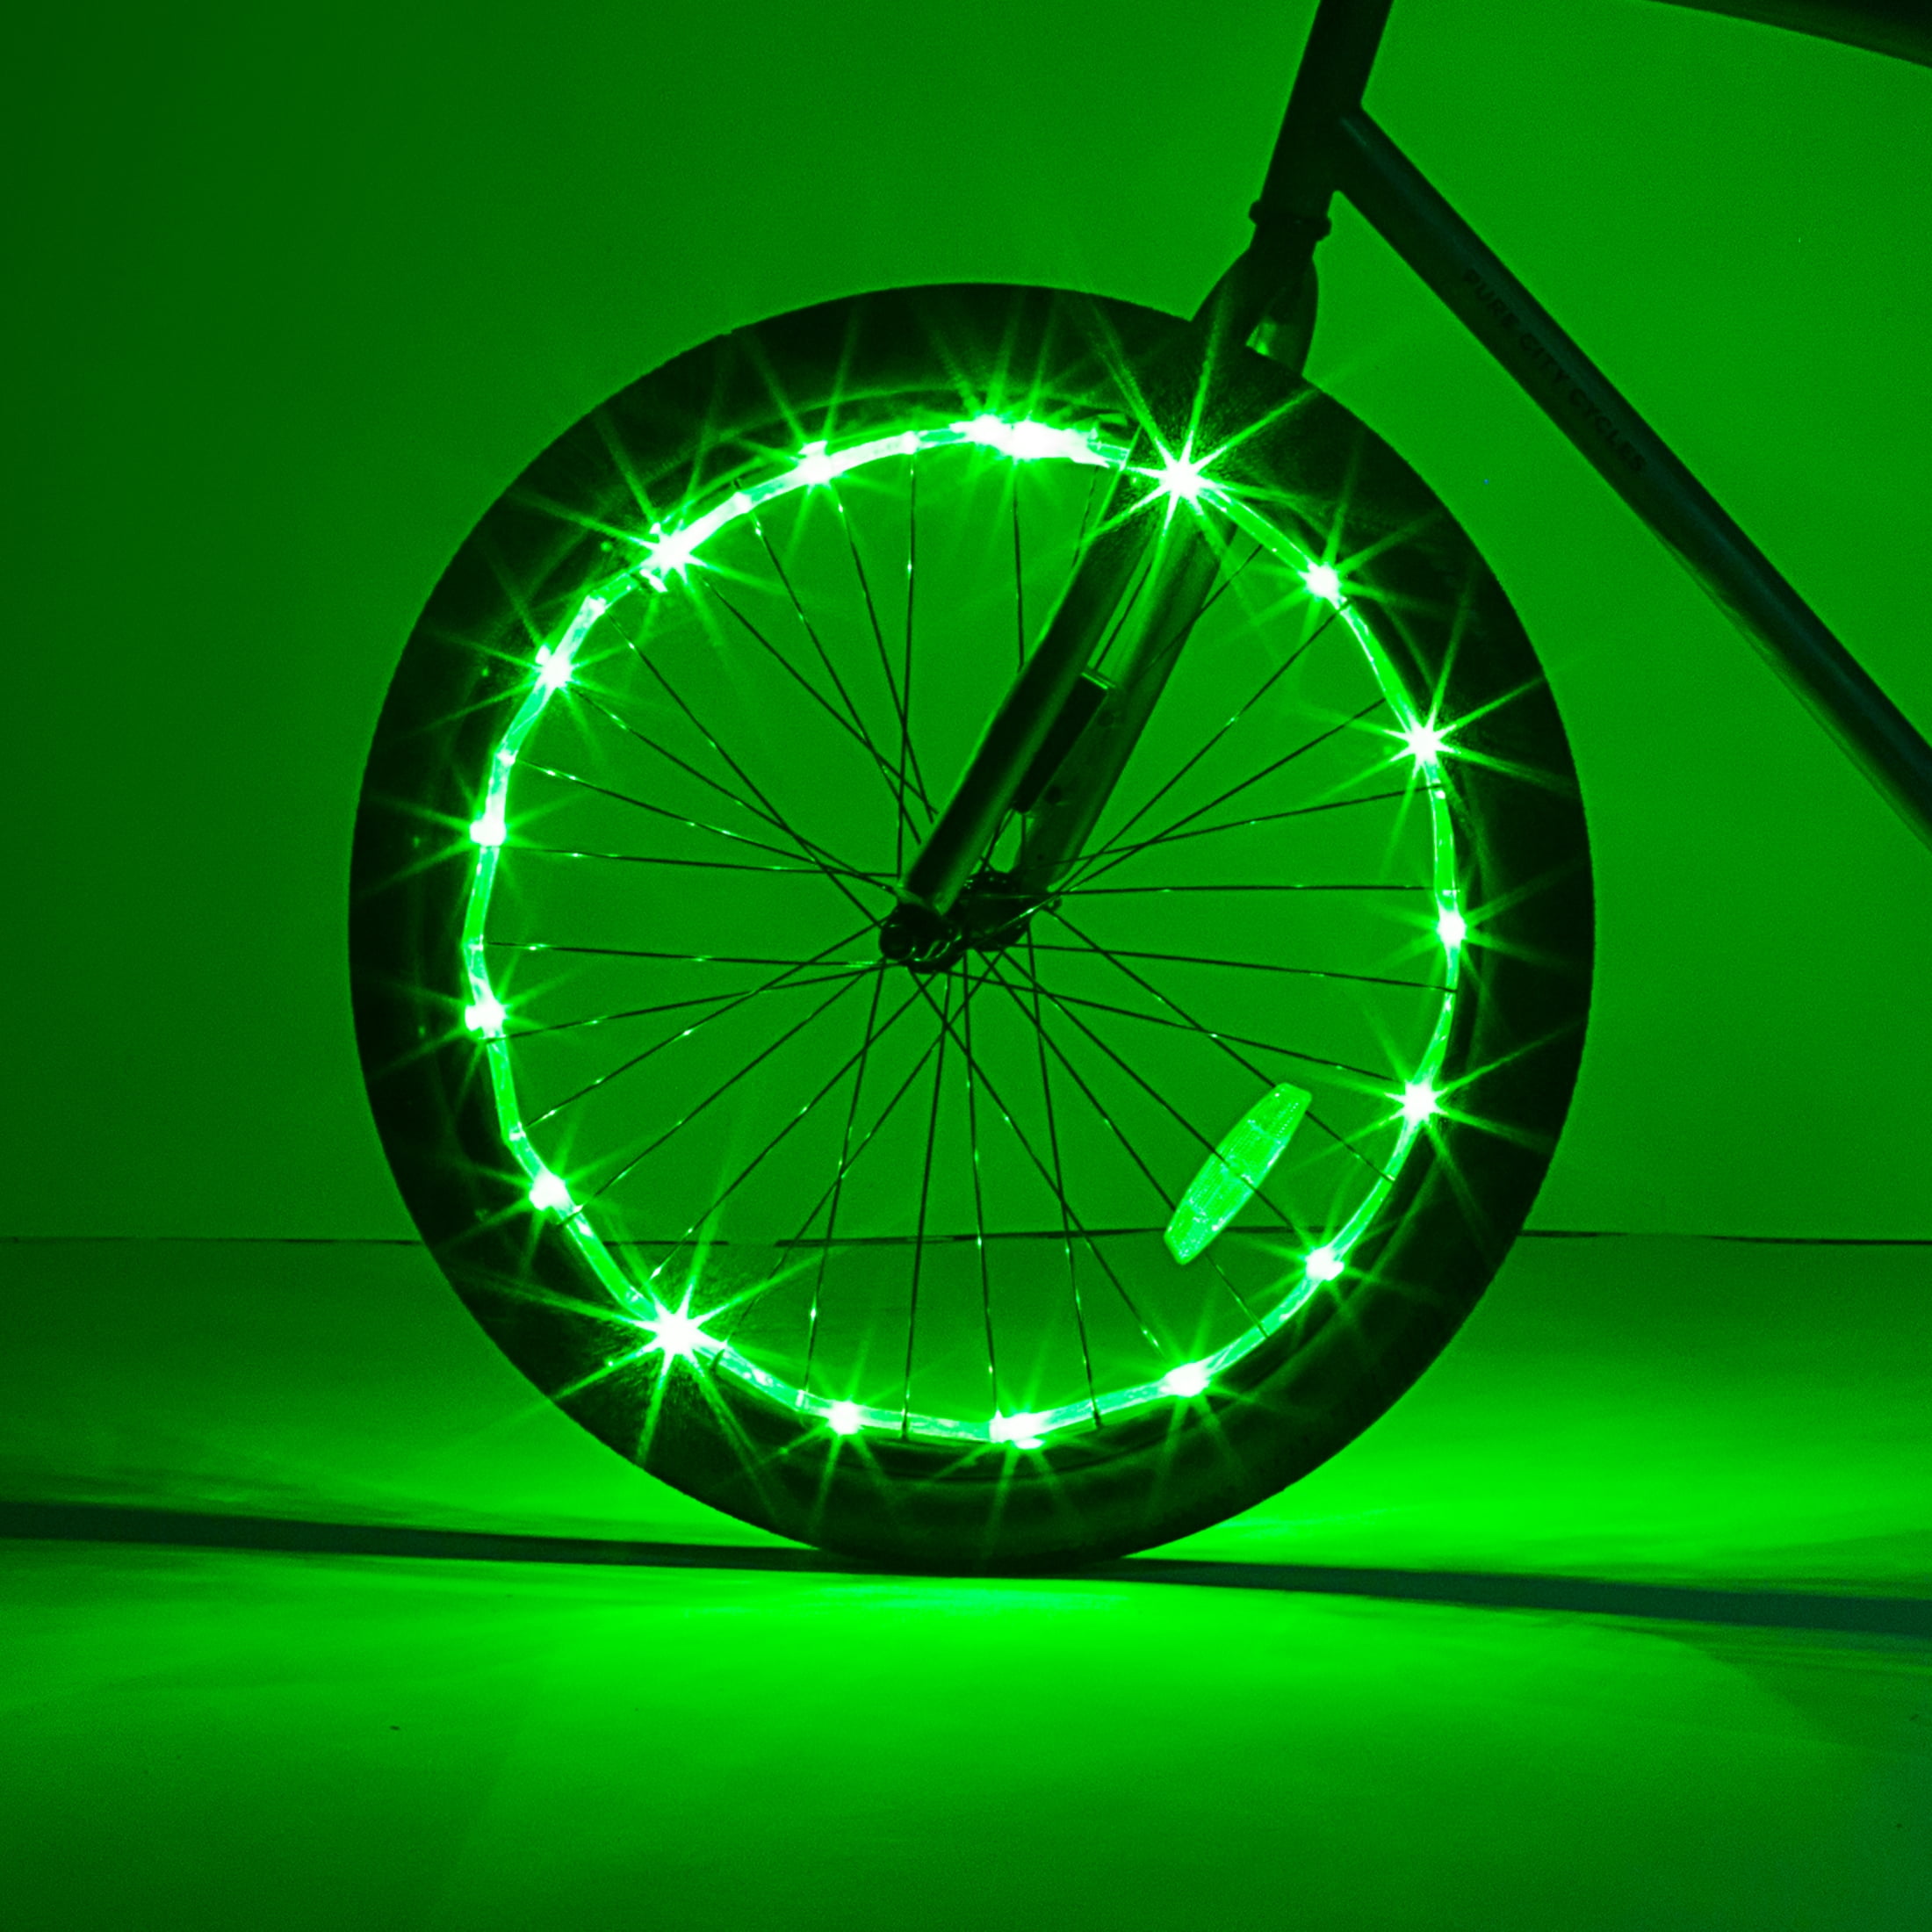 Brightz Wheel LED Bicycle Wheel Accessory Light, Green, for 1 Wheel ...